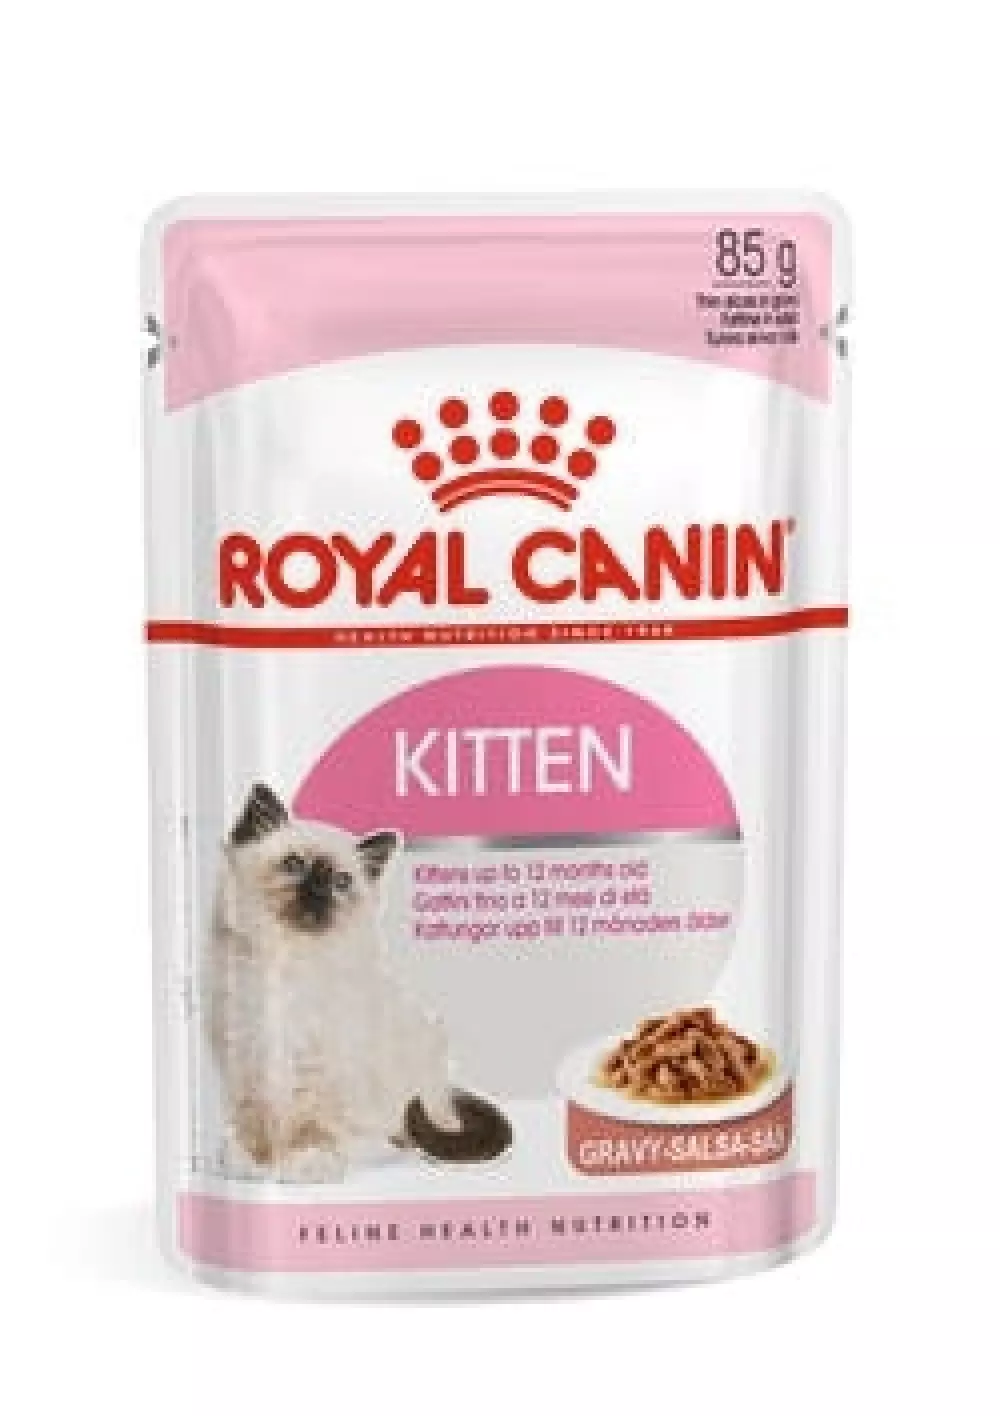 Royal Canin Kitten i saus 12x85g, 9003579308745, Kattemat, Royal Canin, Kitten Gravy 12x85g